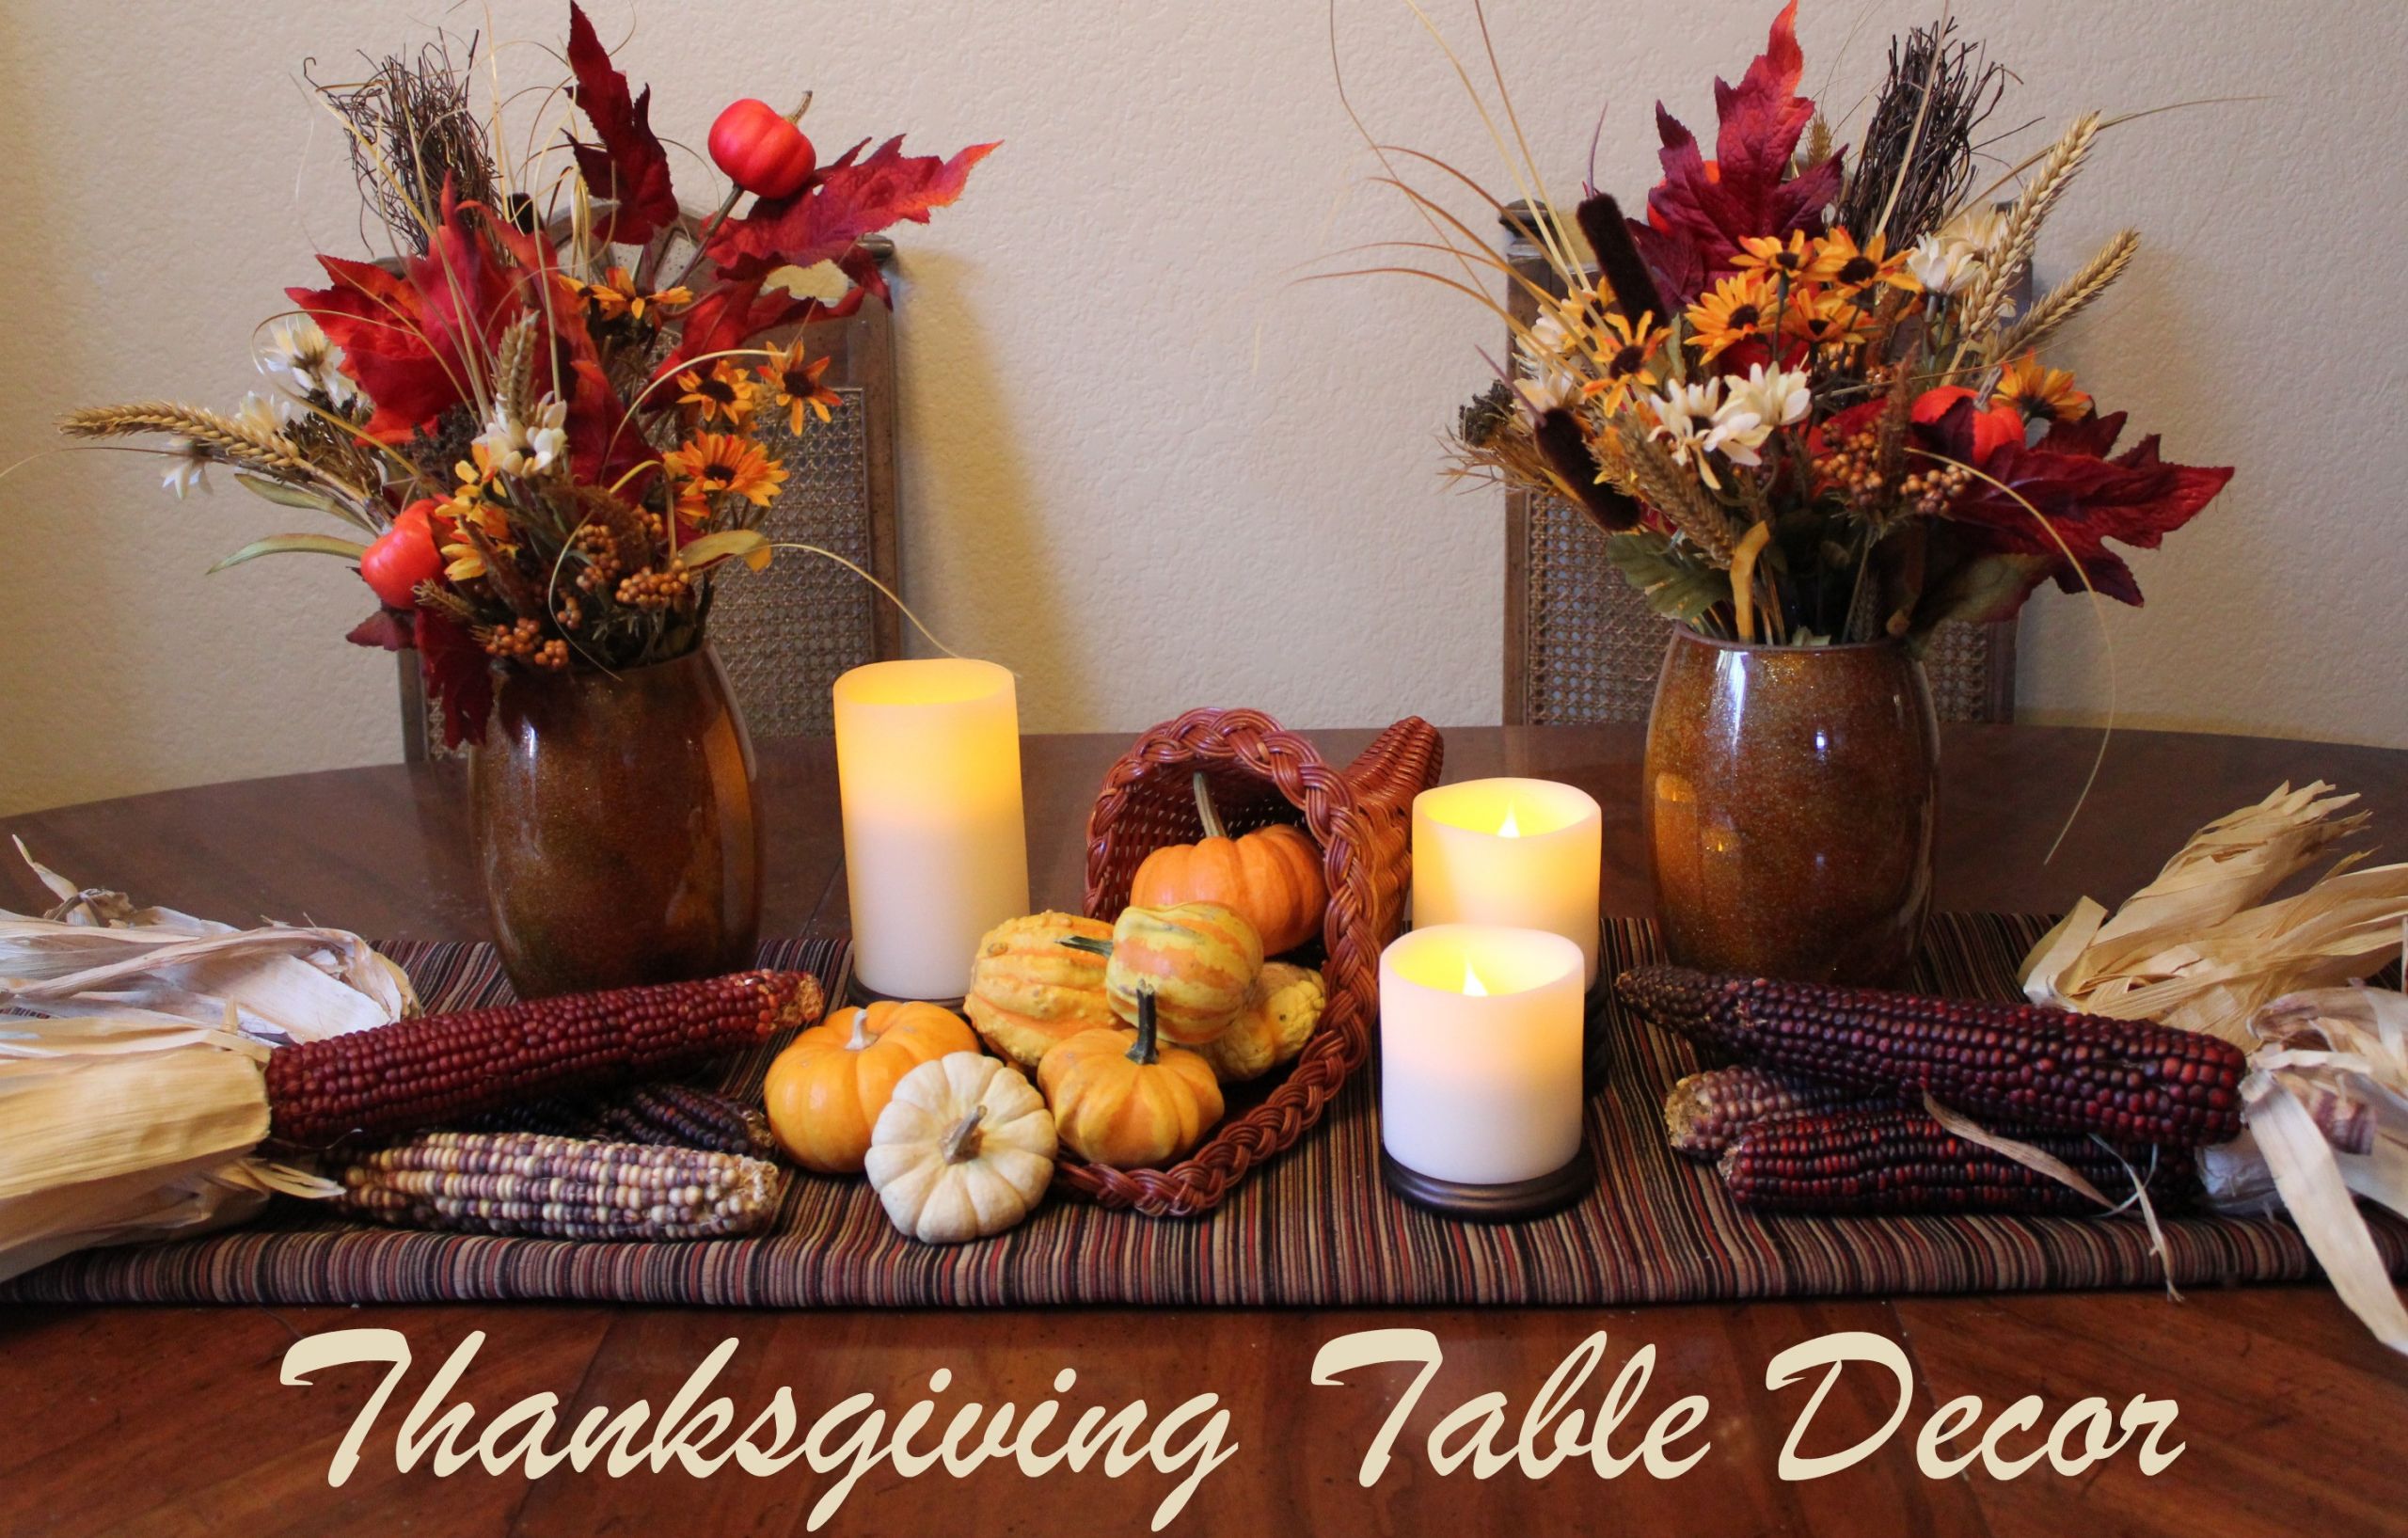 DIY Thanksgiving Decorations
 Cornucopia of Creativity DIY Thanksgiving Table Decor